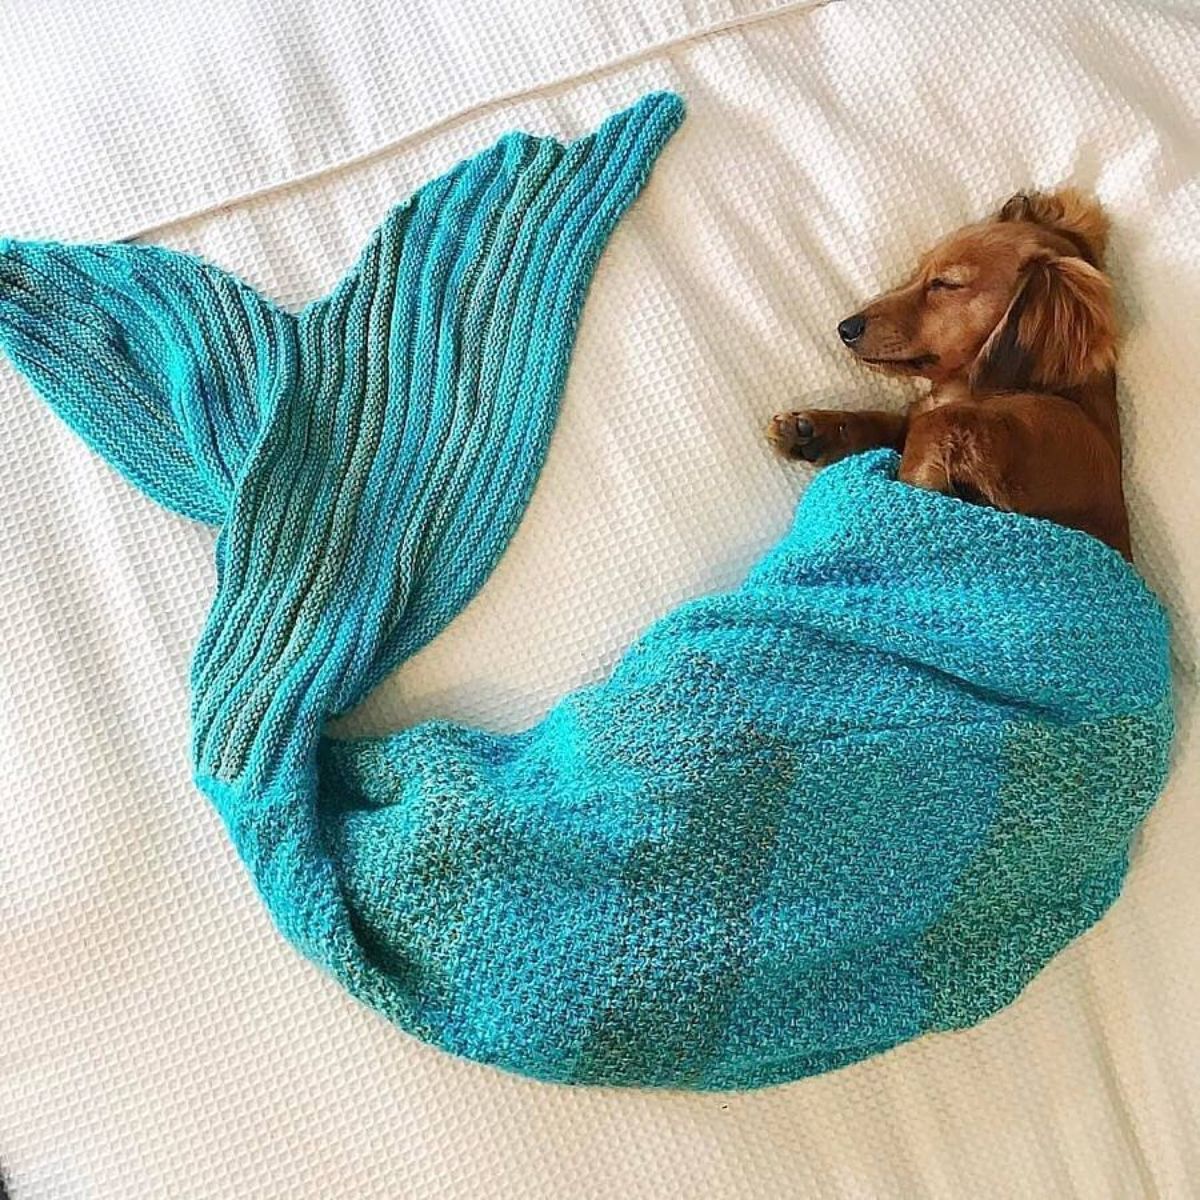 brown dachshund sleeping on a white bedsheet in a blue mermaid blanket